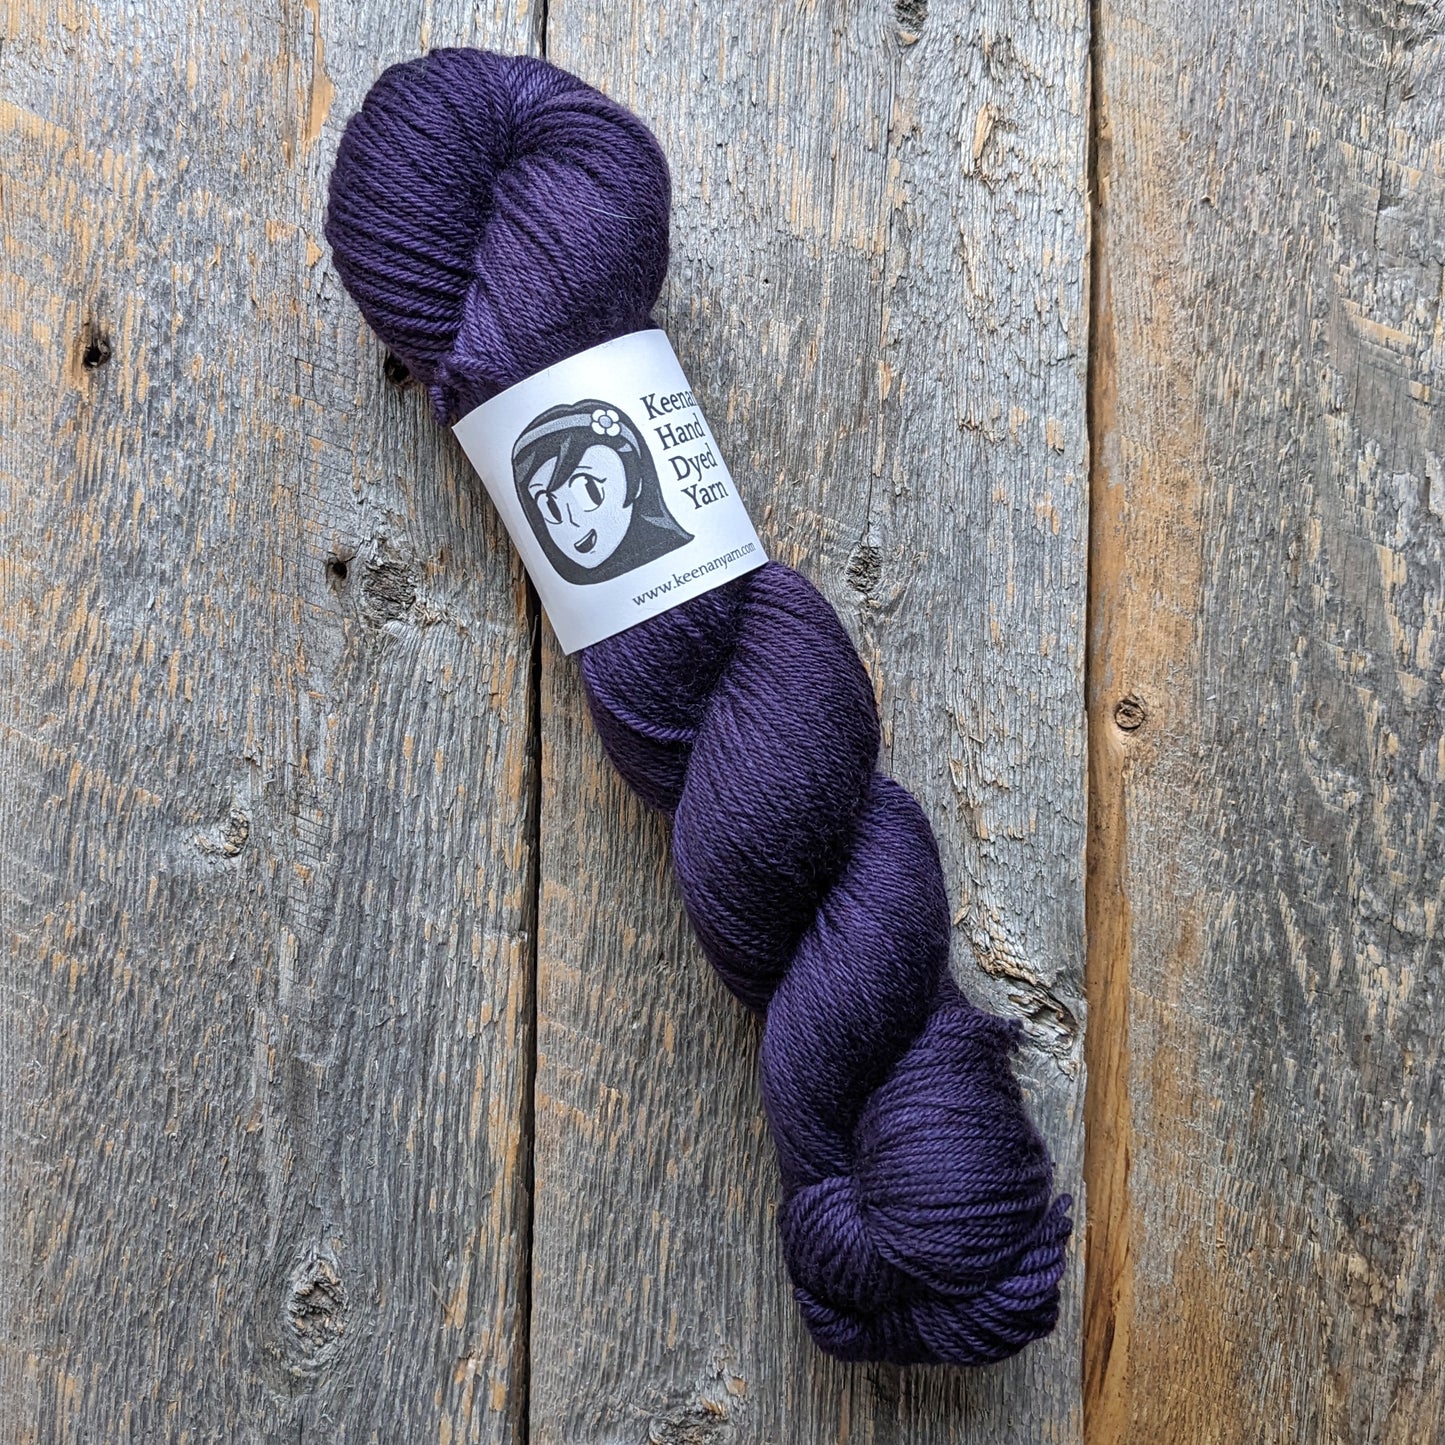 purple BFL yarn, purple bluefaced leicester yarn, DK yarn, purple yarn, superwash